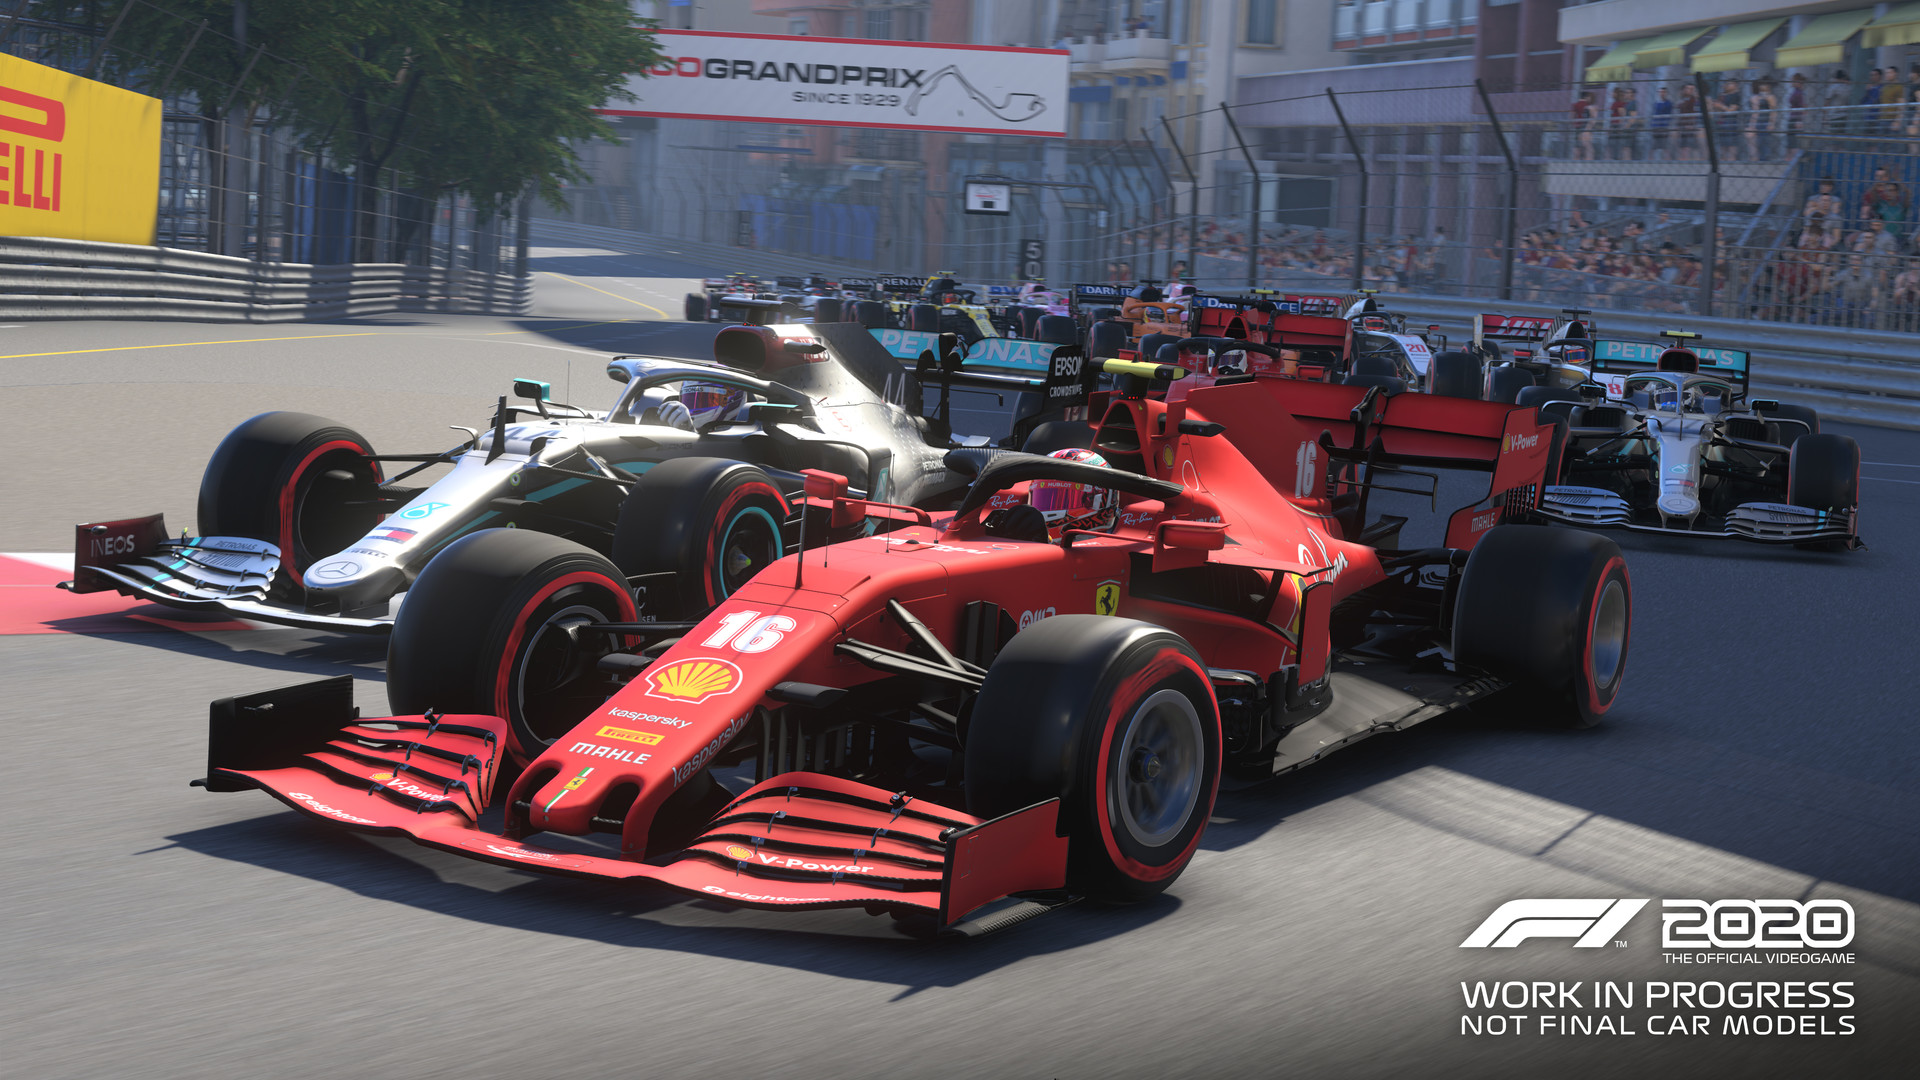 《F1 2020》摩纳哥赛道演示 极具挑战性的狭窄赛道